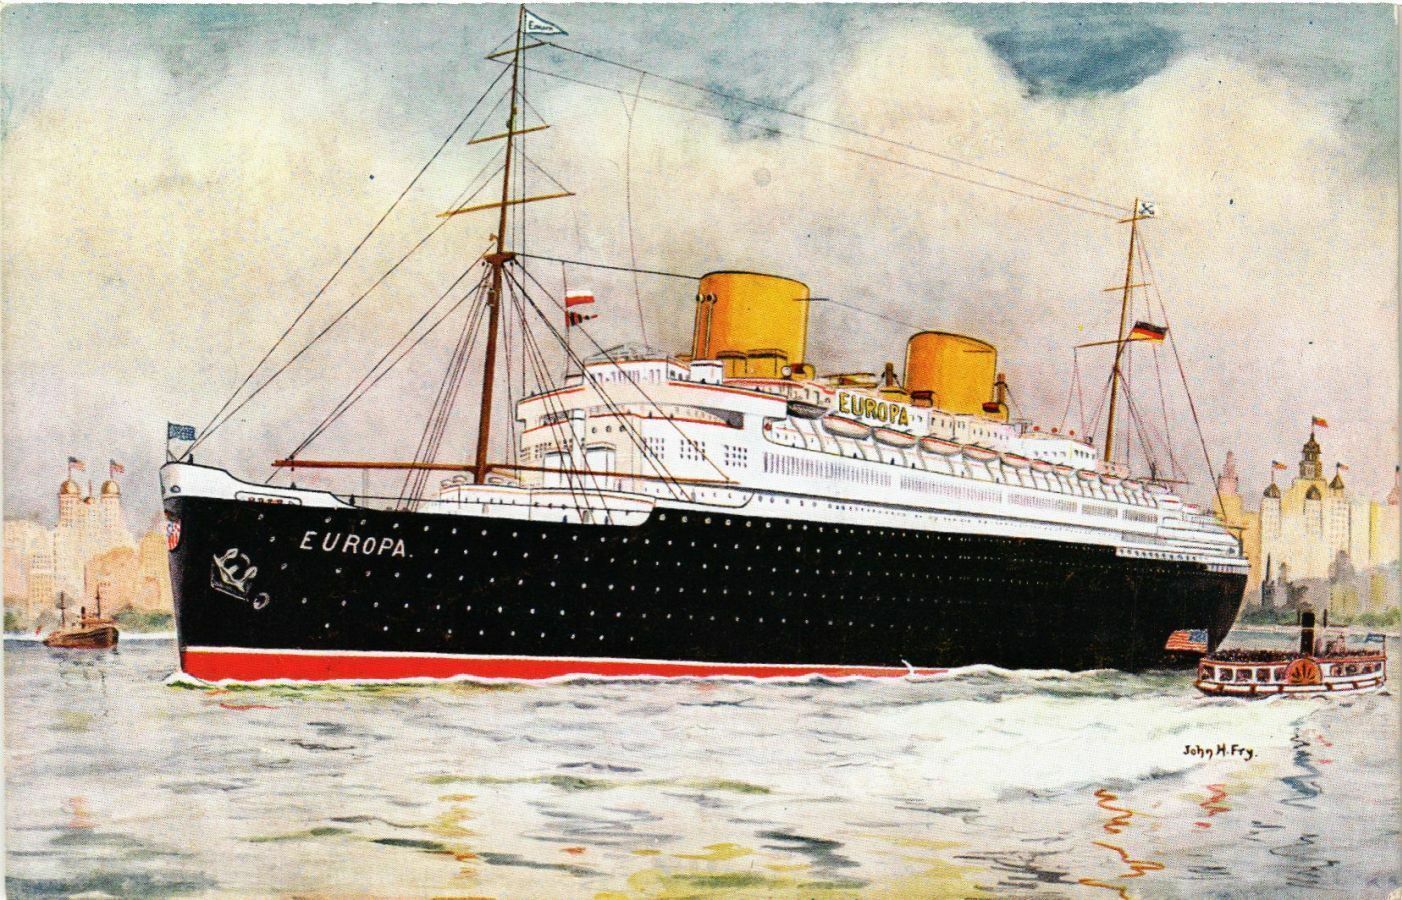 CPA AK S.S. Europe - North German-Lloyd Co. - Ships (774988)